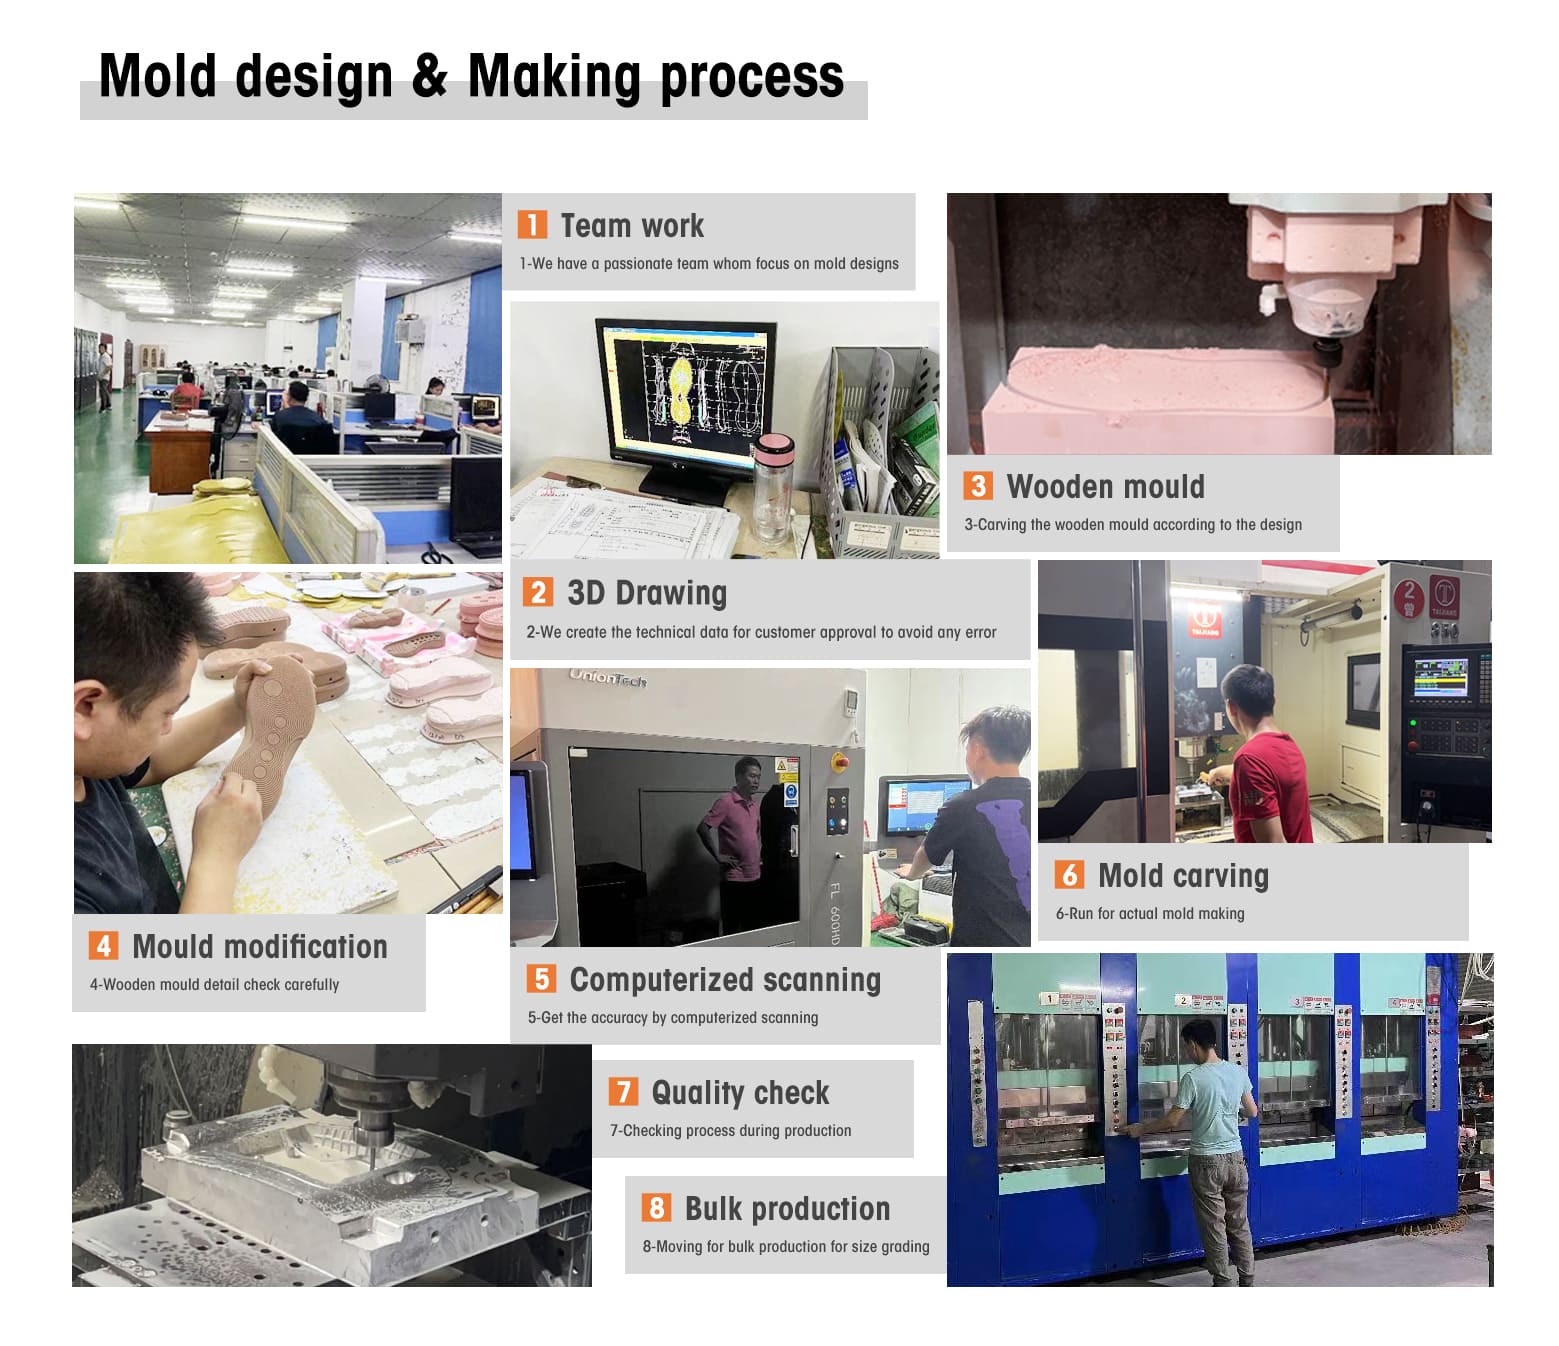 Mold design & Making process